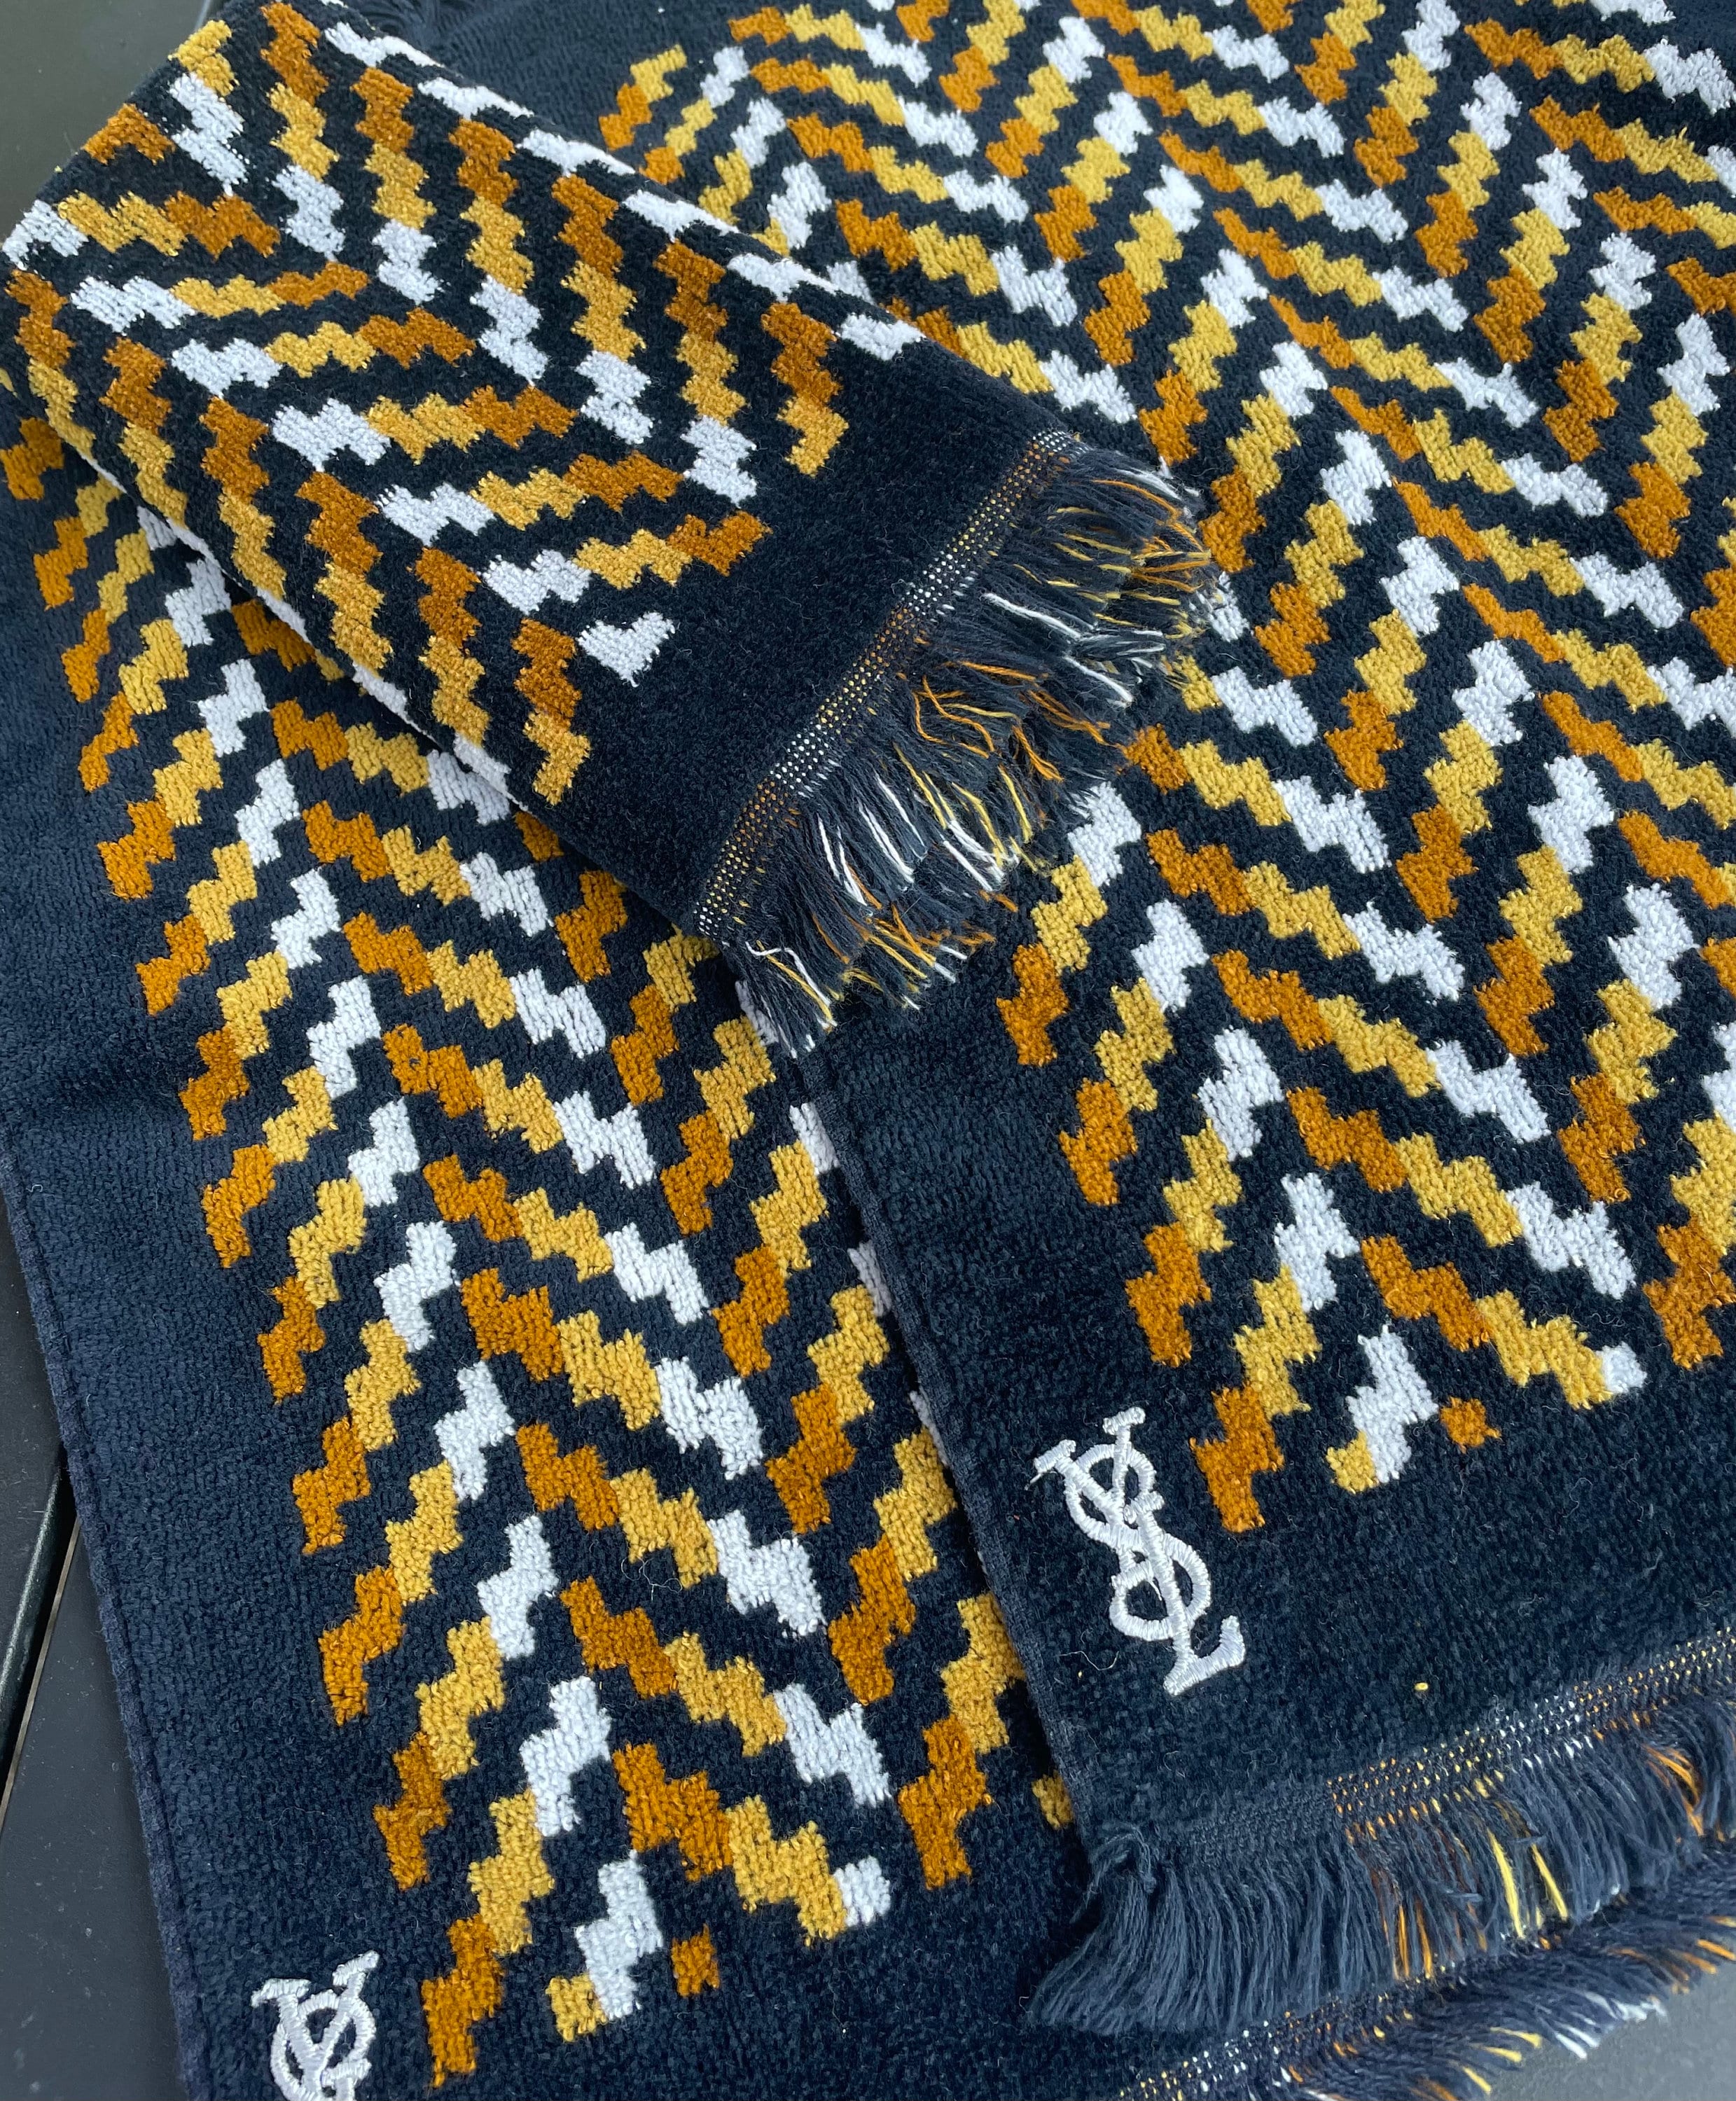 VintagePrepGirl Vintage Yves Saint Laurent Menswear Dark Grey Grey Royal Blue Cable Knit Mens Shetland Wool Sweater Vest Small S Tennis Cricket